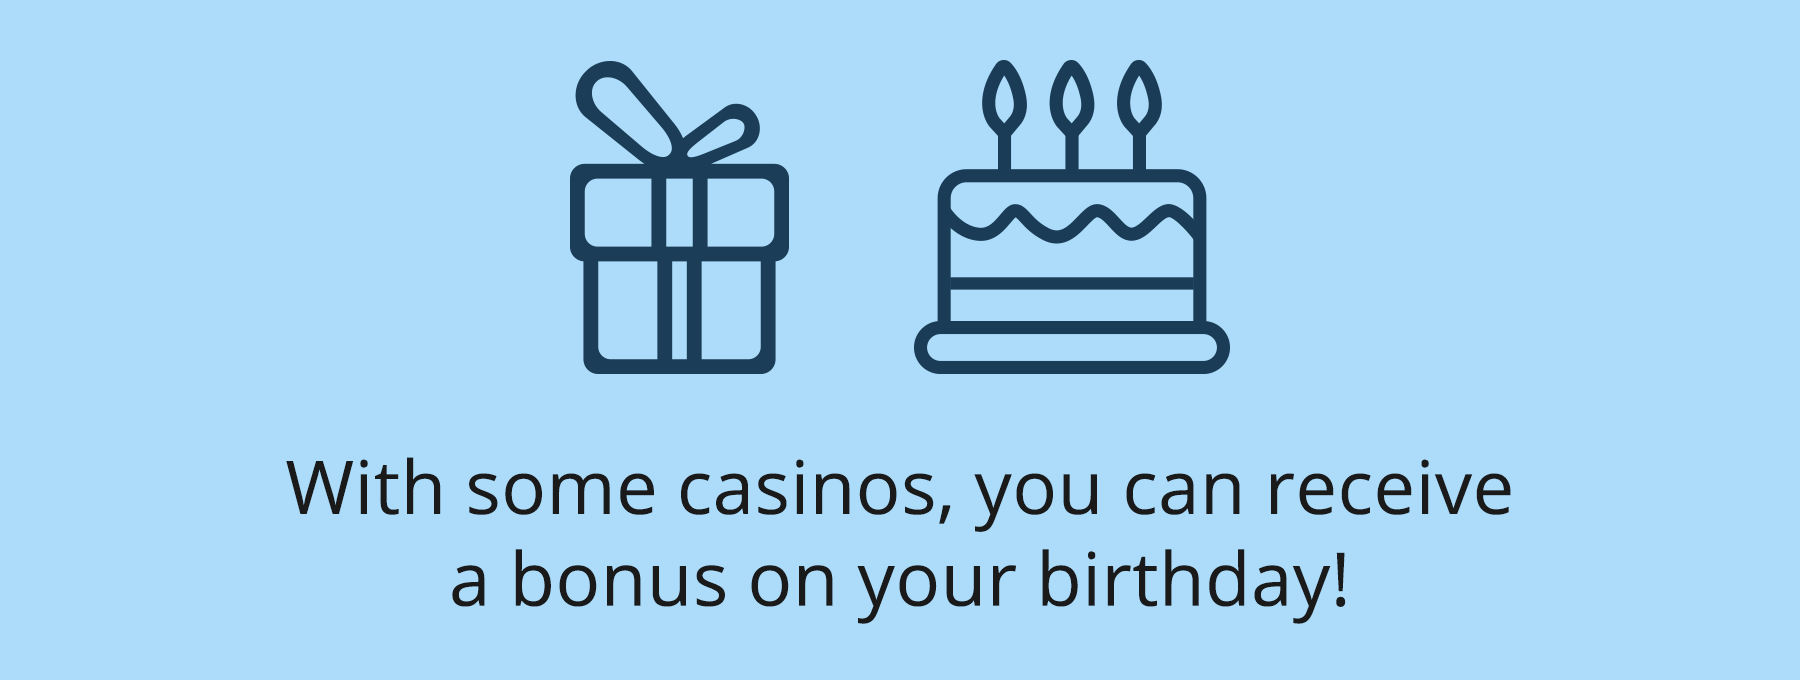 Casino Birthday Bonus - Emirates Casino Online Casino Bonus Guide